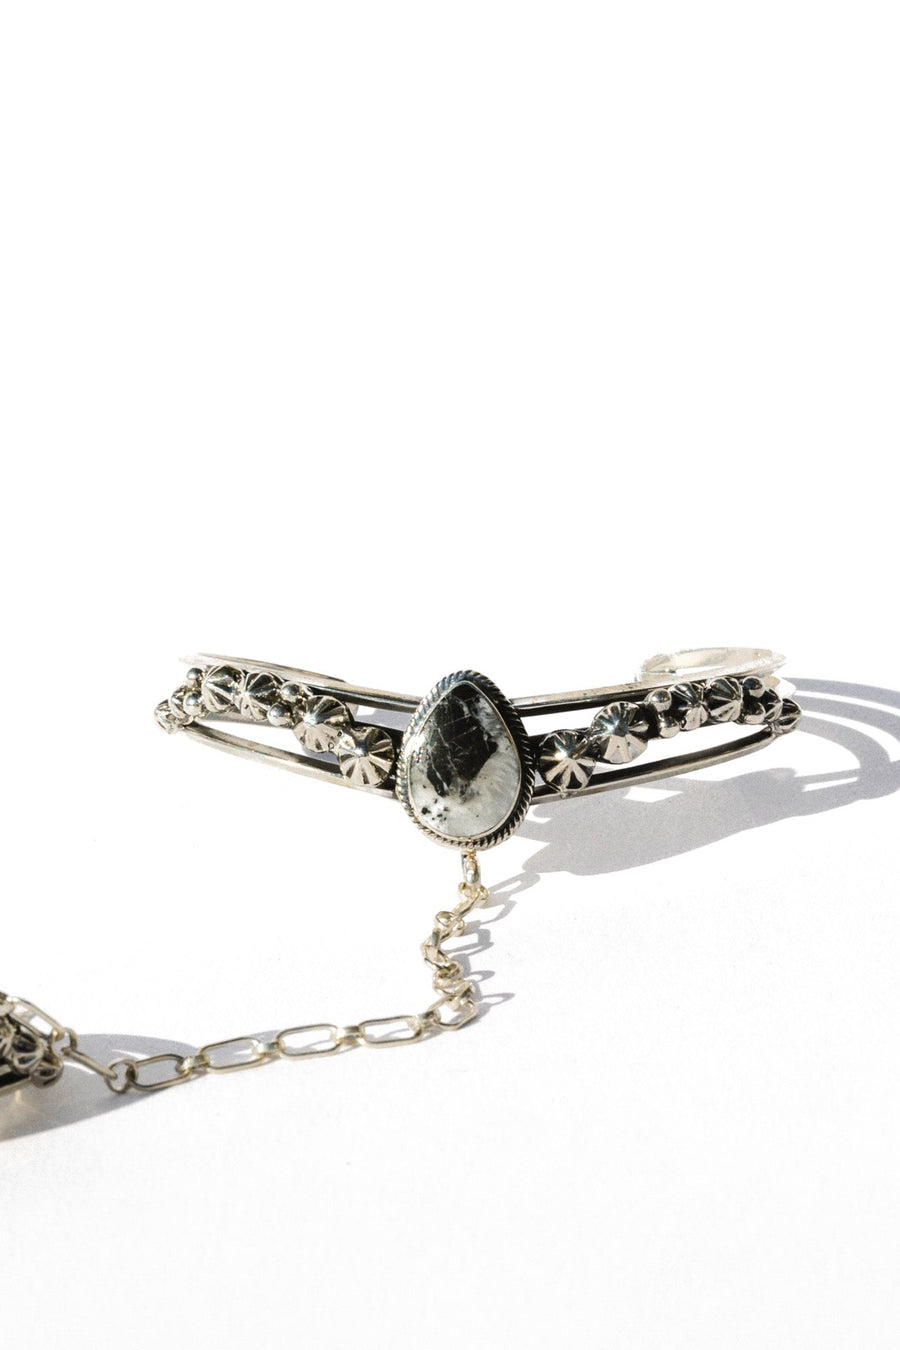 Sunwest Jewelry Silver / US 7 / White Buffalo Turquoise White Buffalo Cuff and Ring Hand Chain